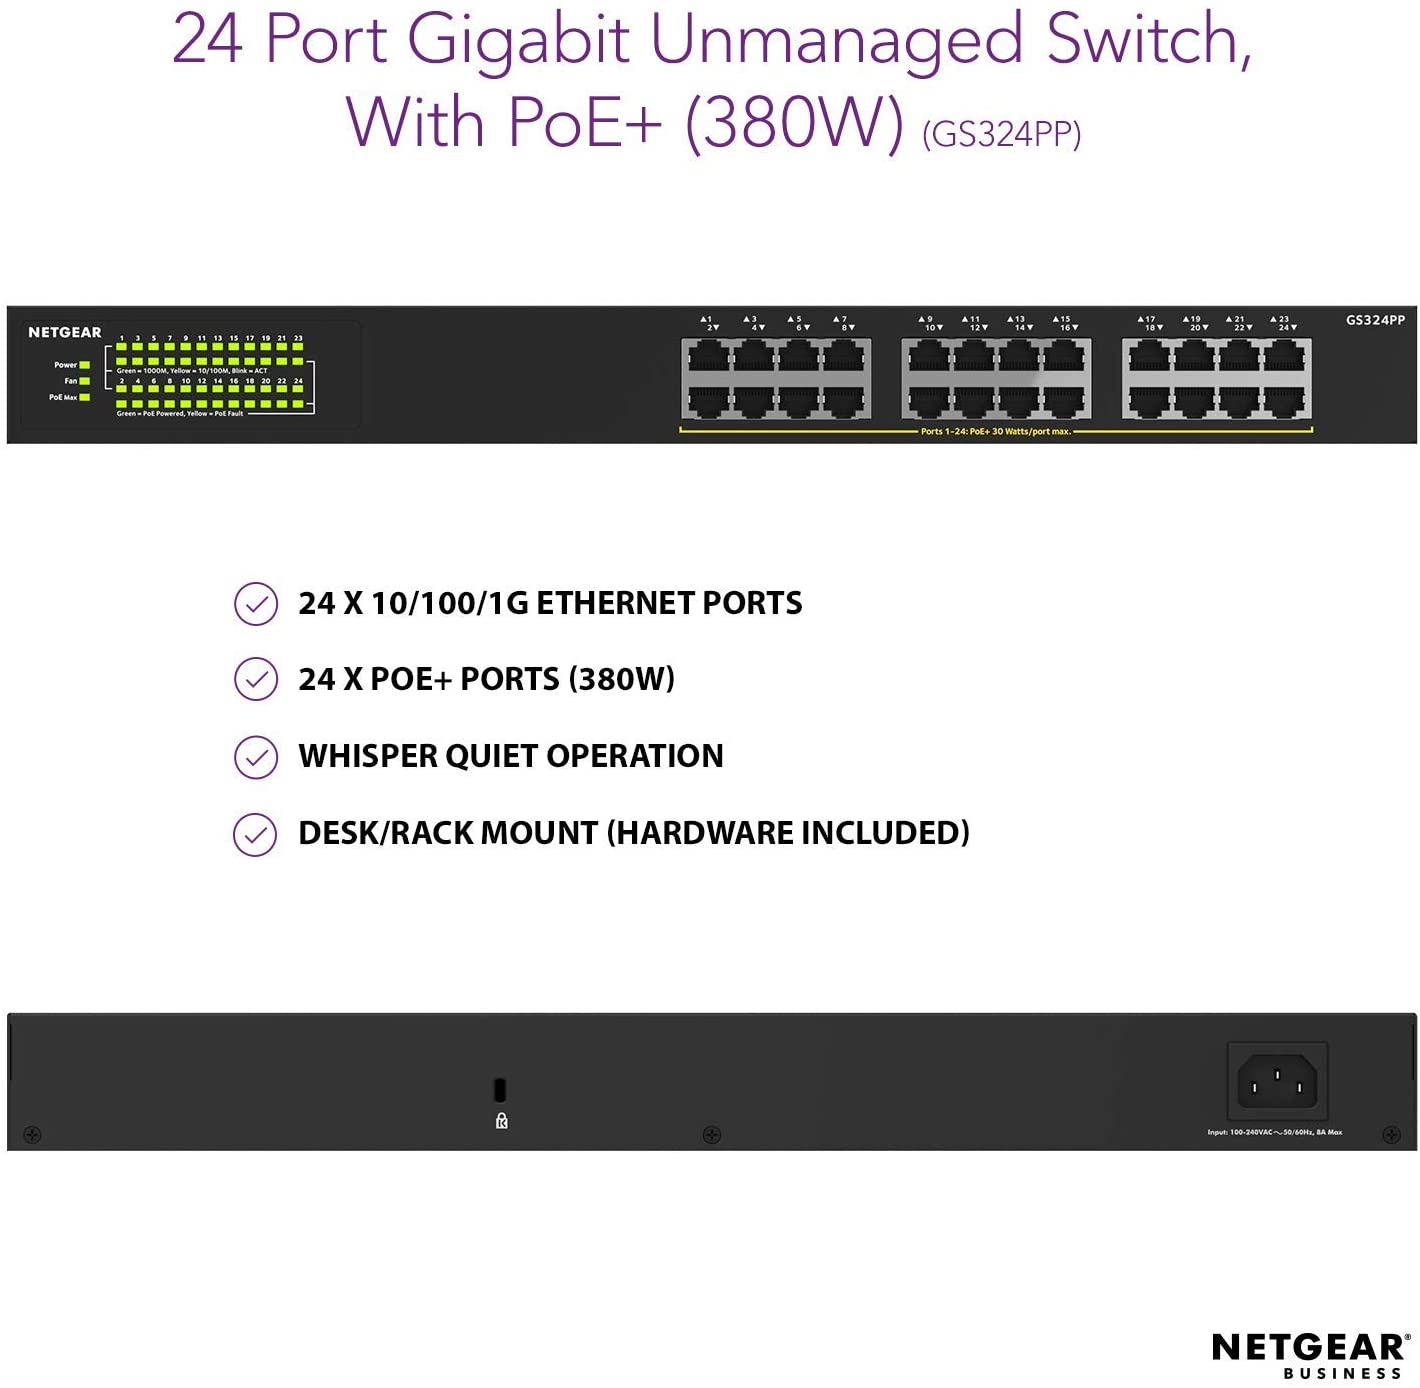 NETGEAR 24 PORT gigabit Unmanaged POE+ ETHERNET SWITCH (380W)